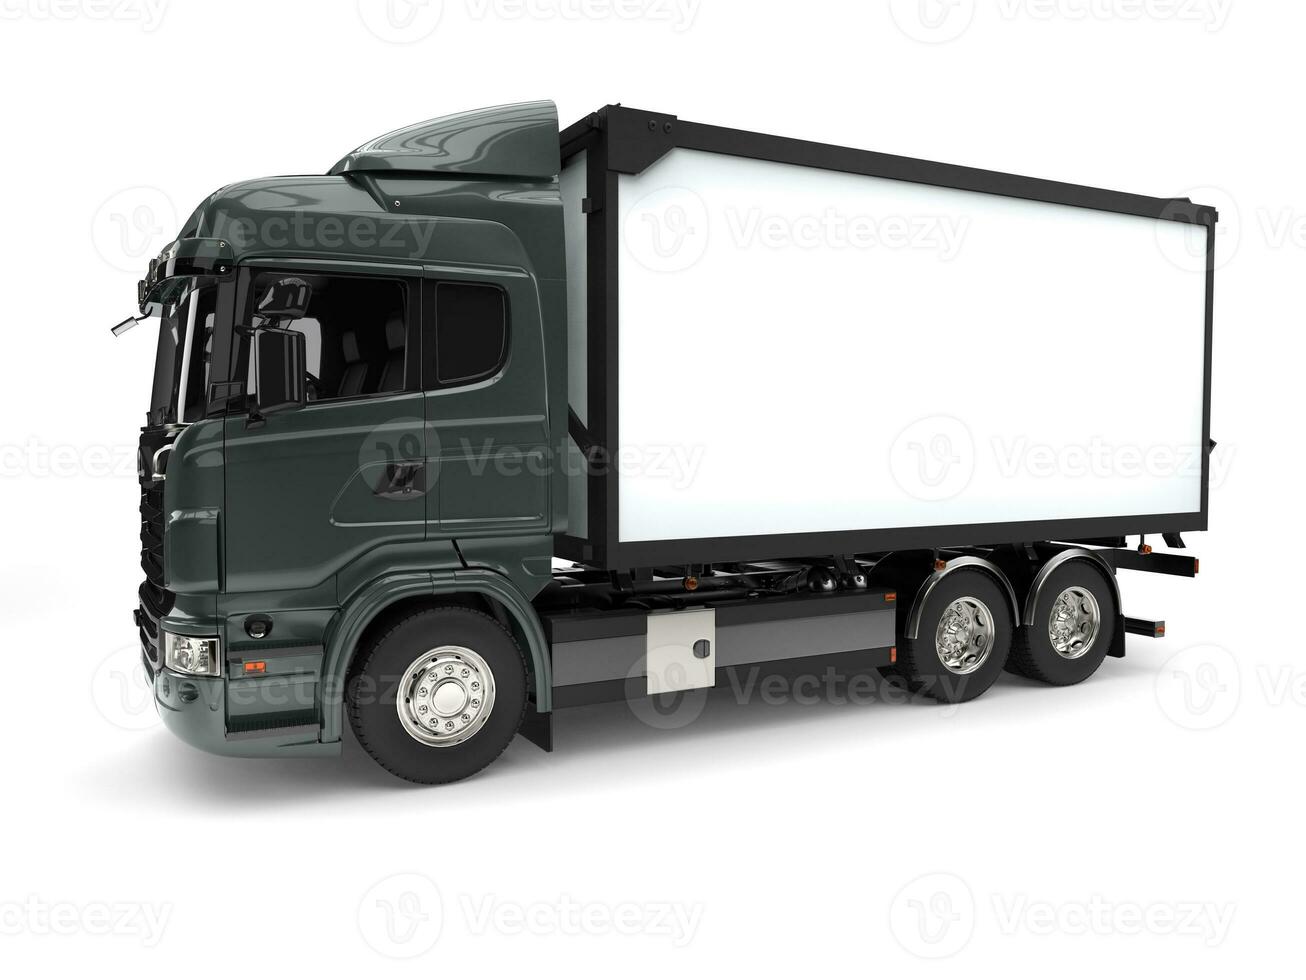 metallico buio grigio moderno frigorifero camion foto